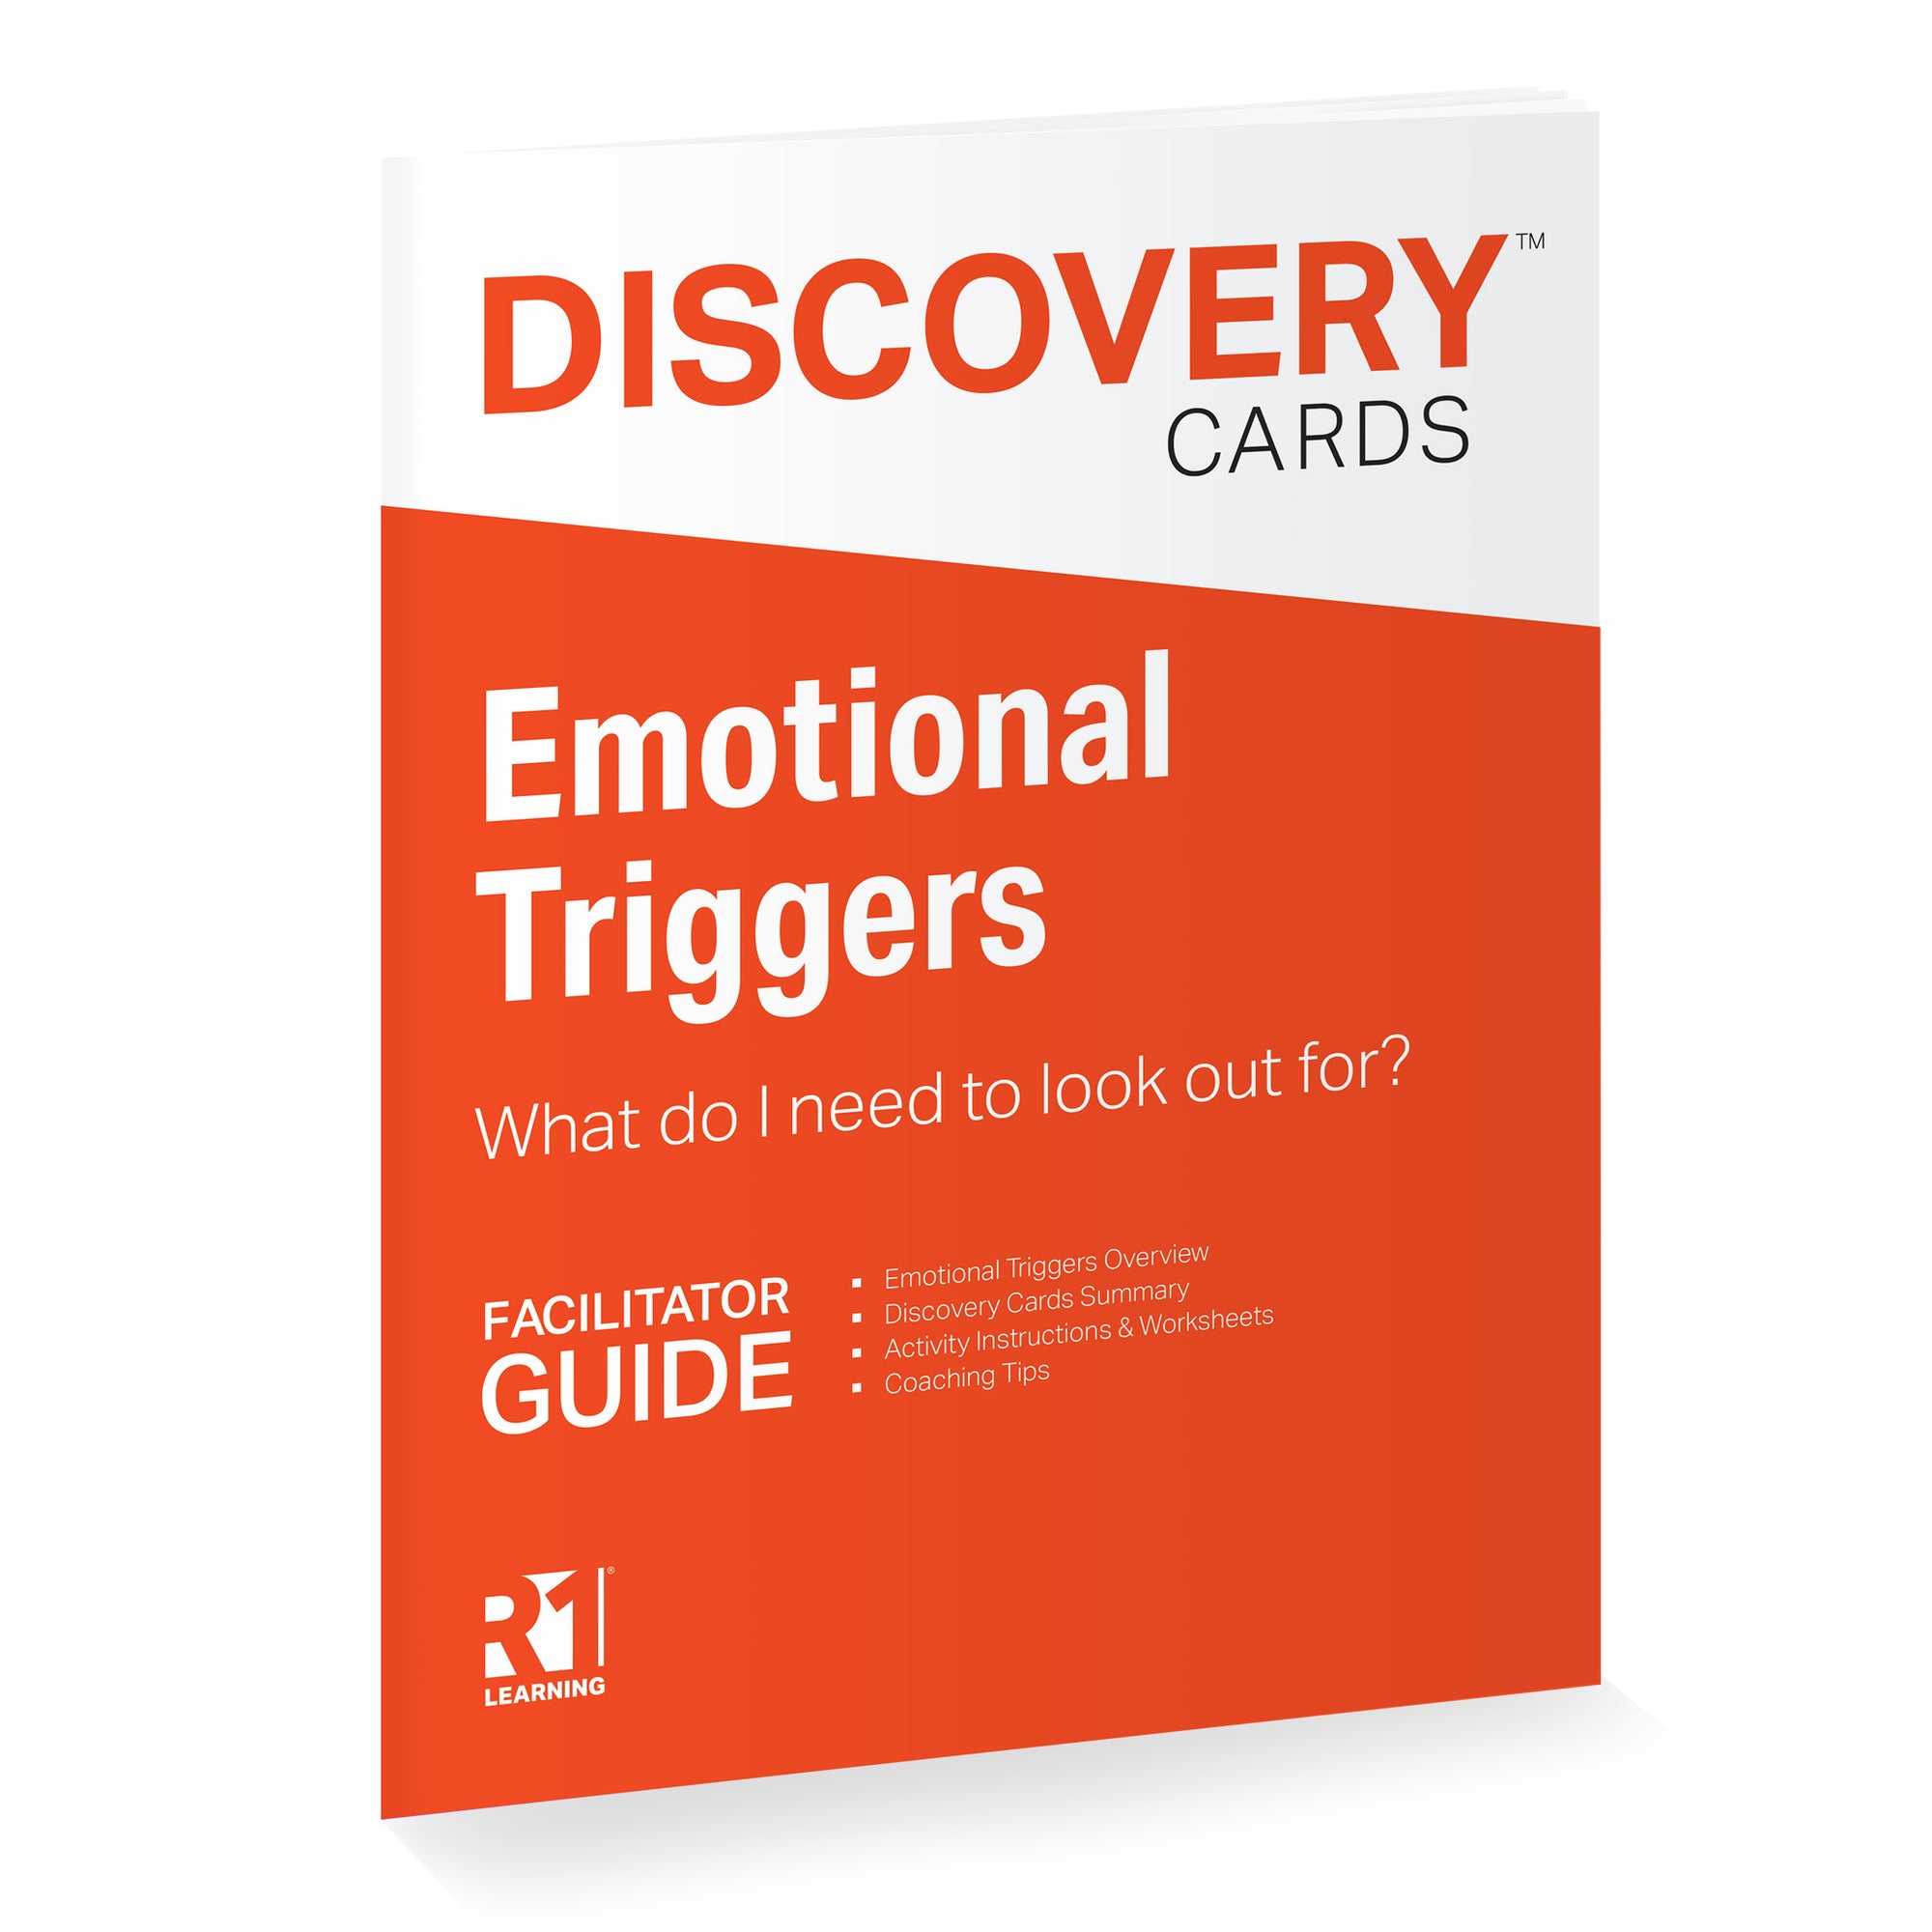 Emotional Triggers Group Kit — 12 decks